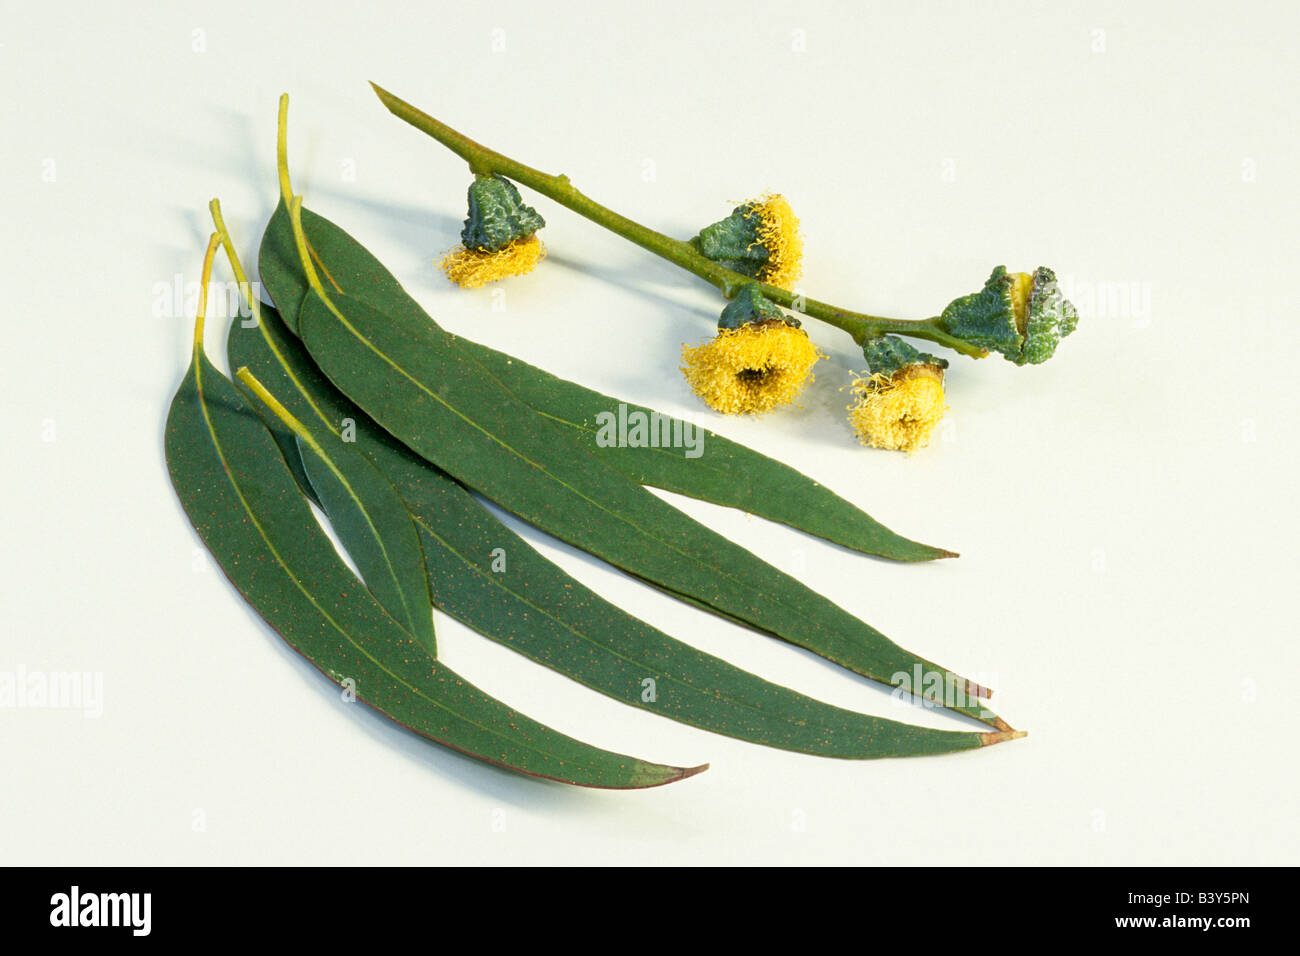 Tasmanian Blue Gum, Blue Gum Eucalyptus (Eucalyptus globulus), leaves and flowers, studio picture Stock Photo